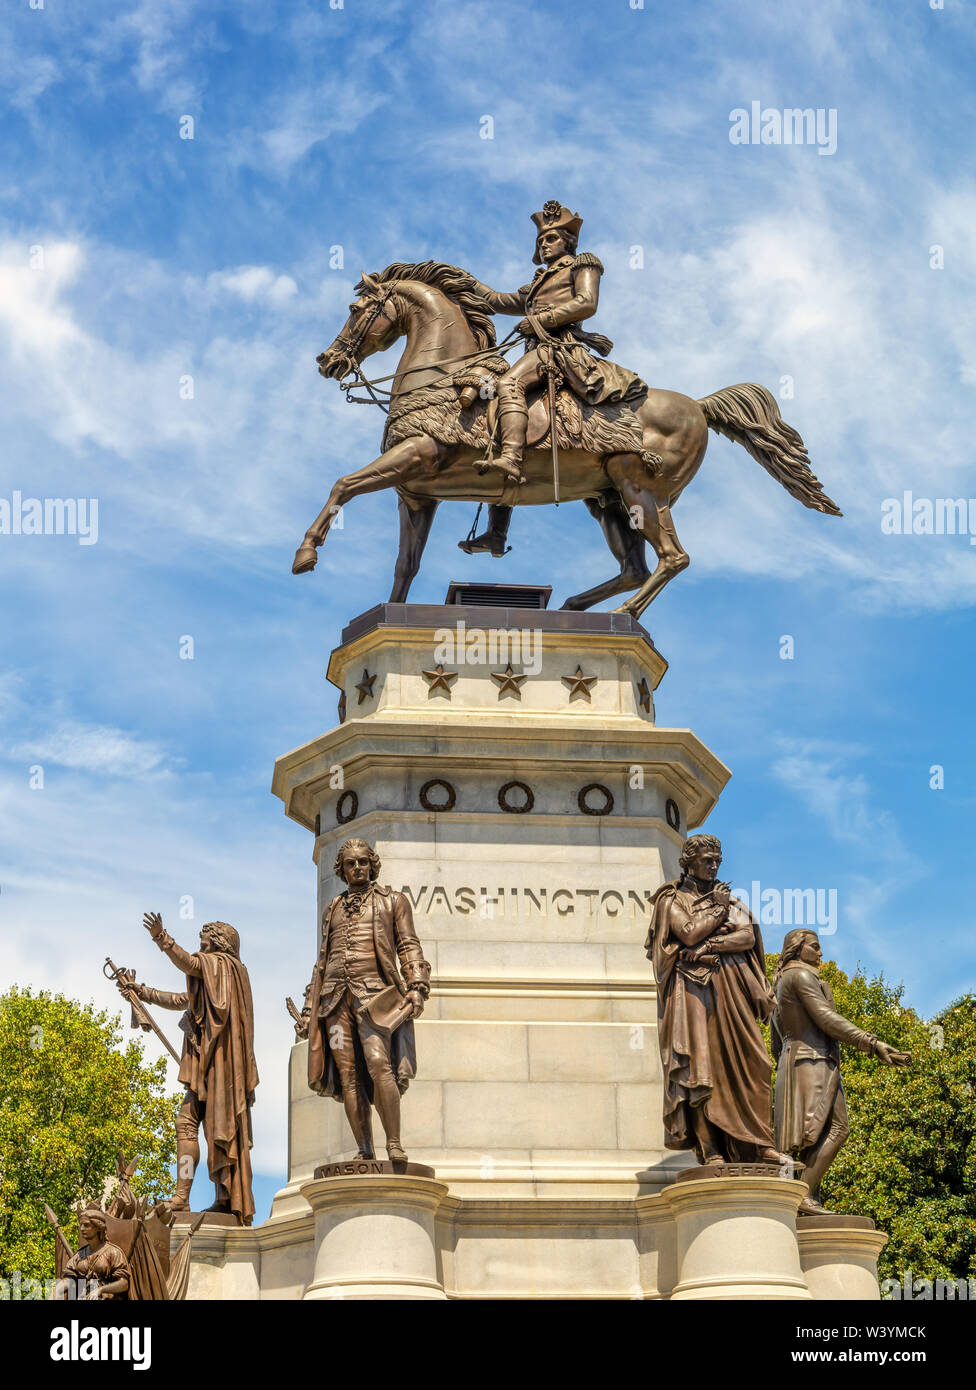 WASHINGTON MONUMENT, RICHMOND, VA - CIRCA 2019. The Washington Monument is an equestrian statue on the capitol square, at Richmond, Virginia Stock Photo